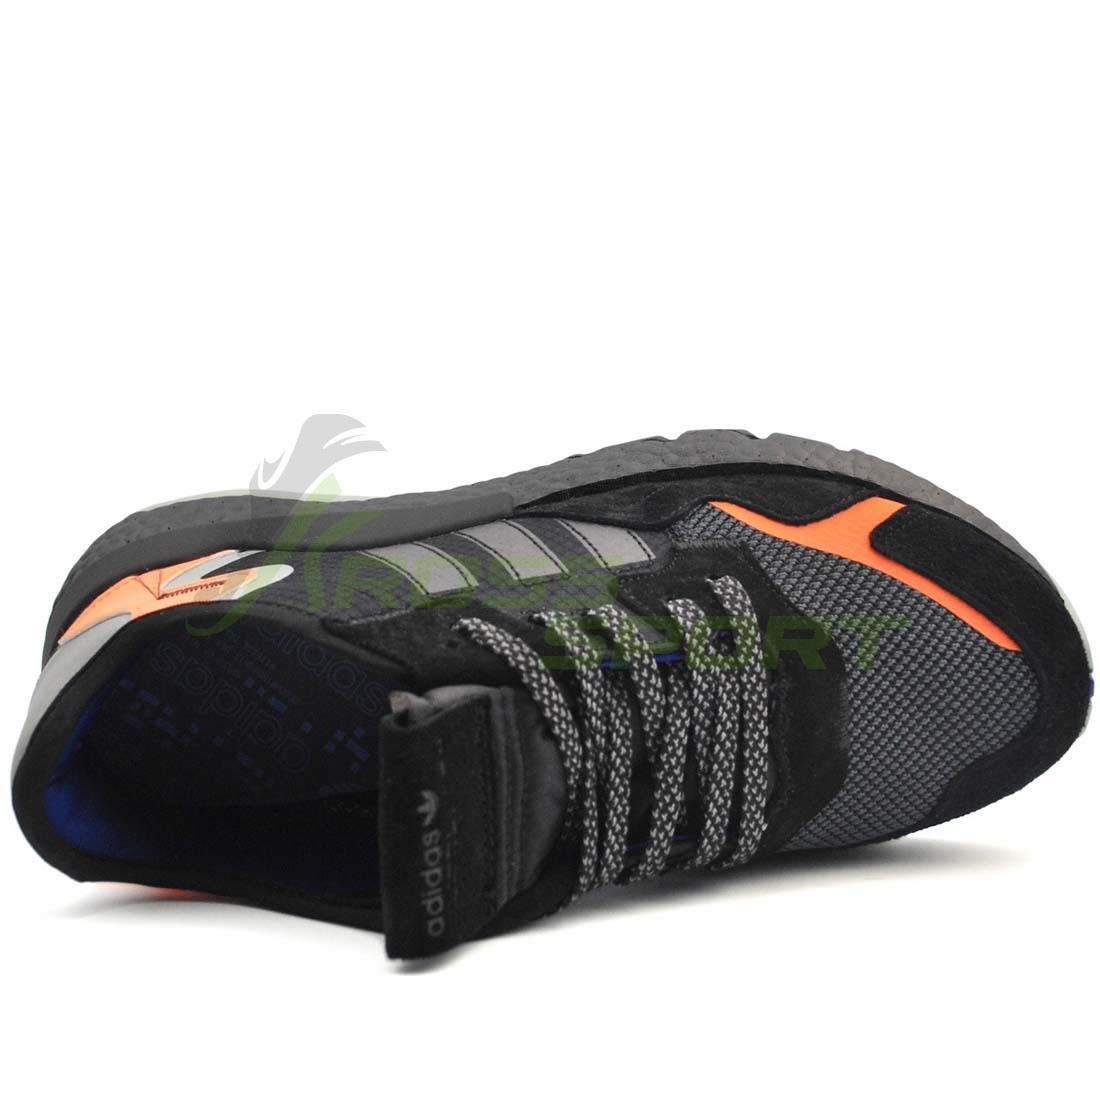  Adidas Nite Jogger Core Black